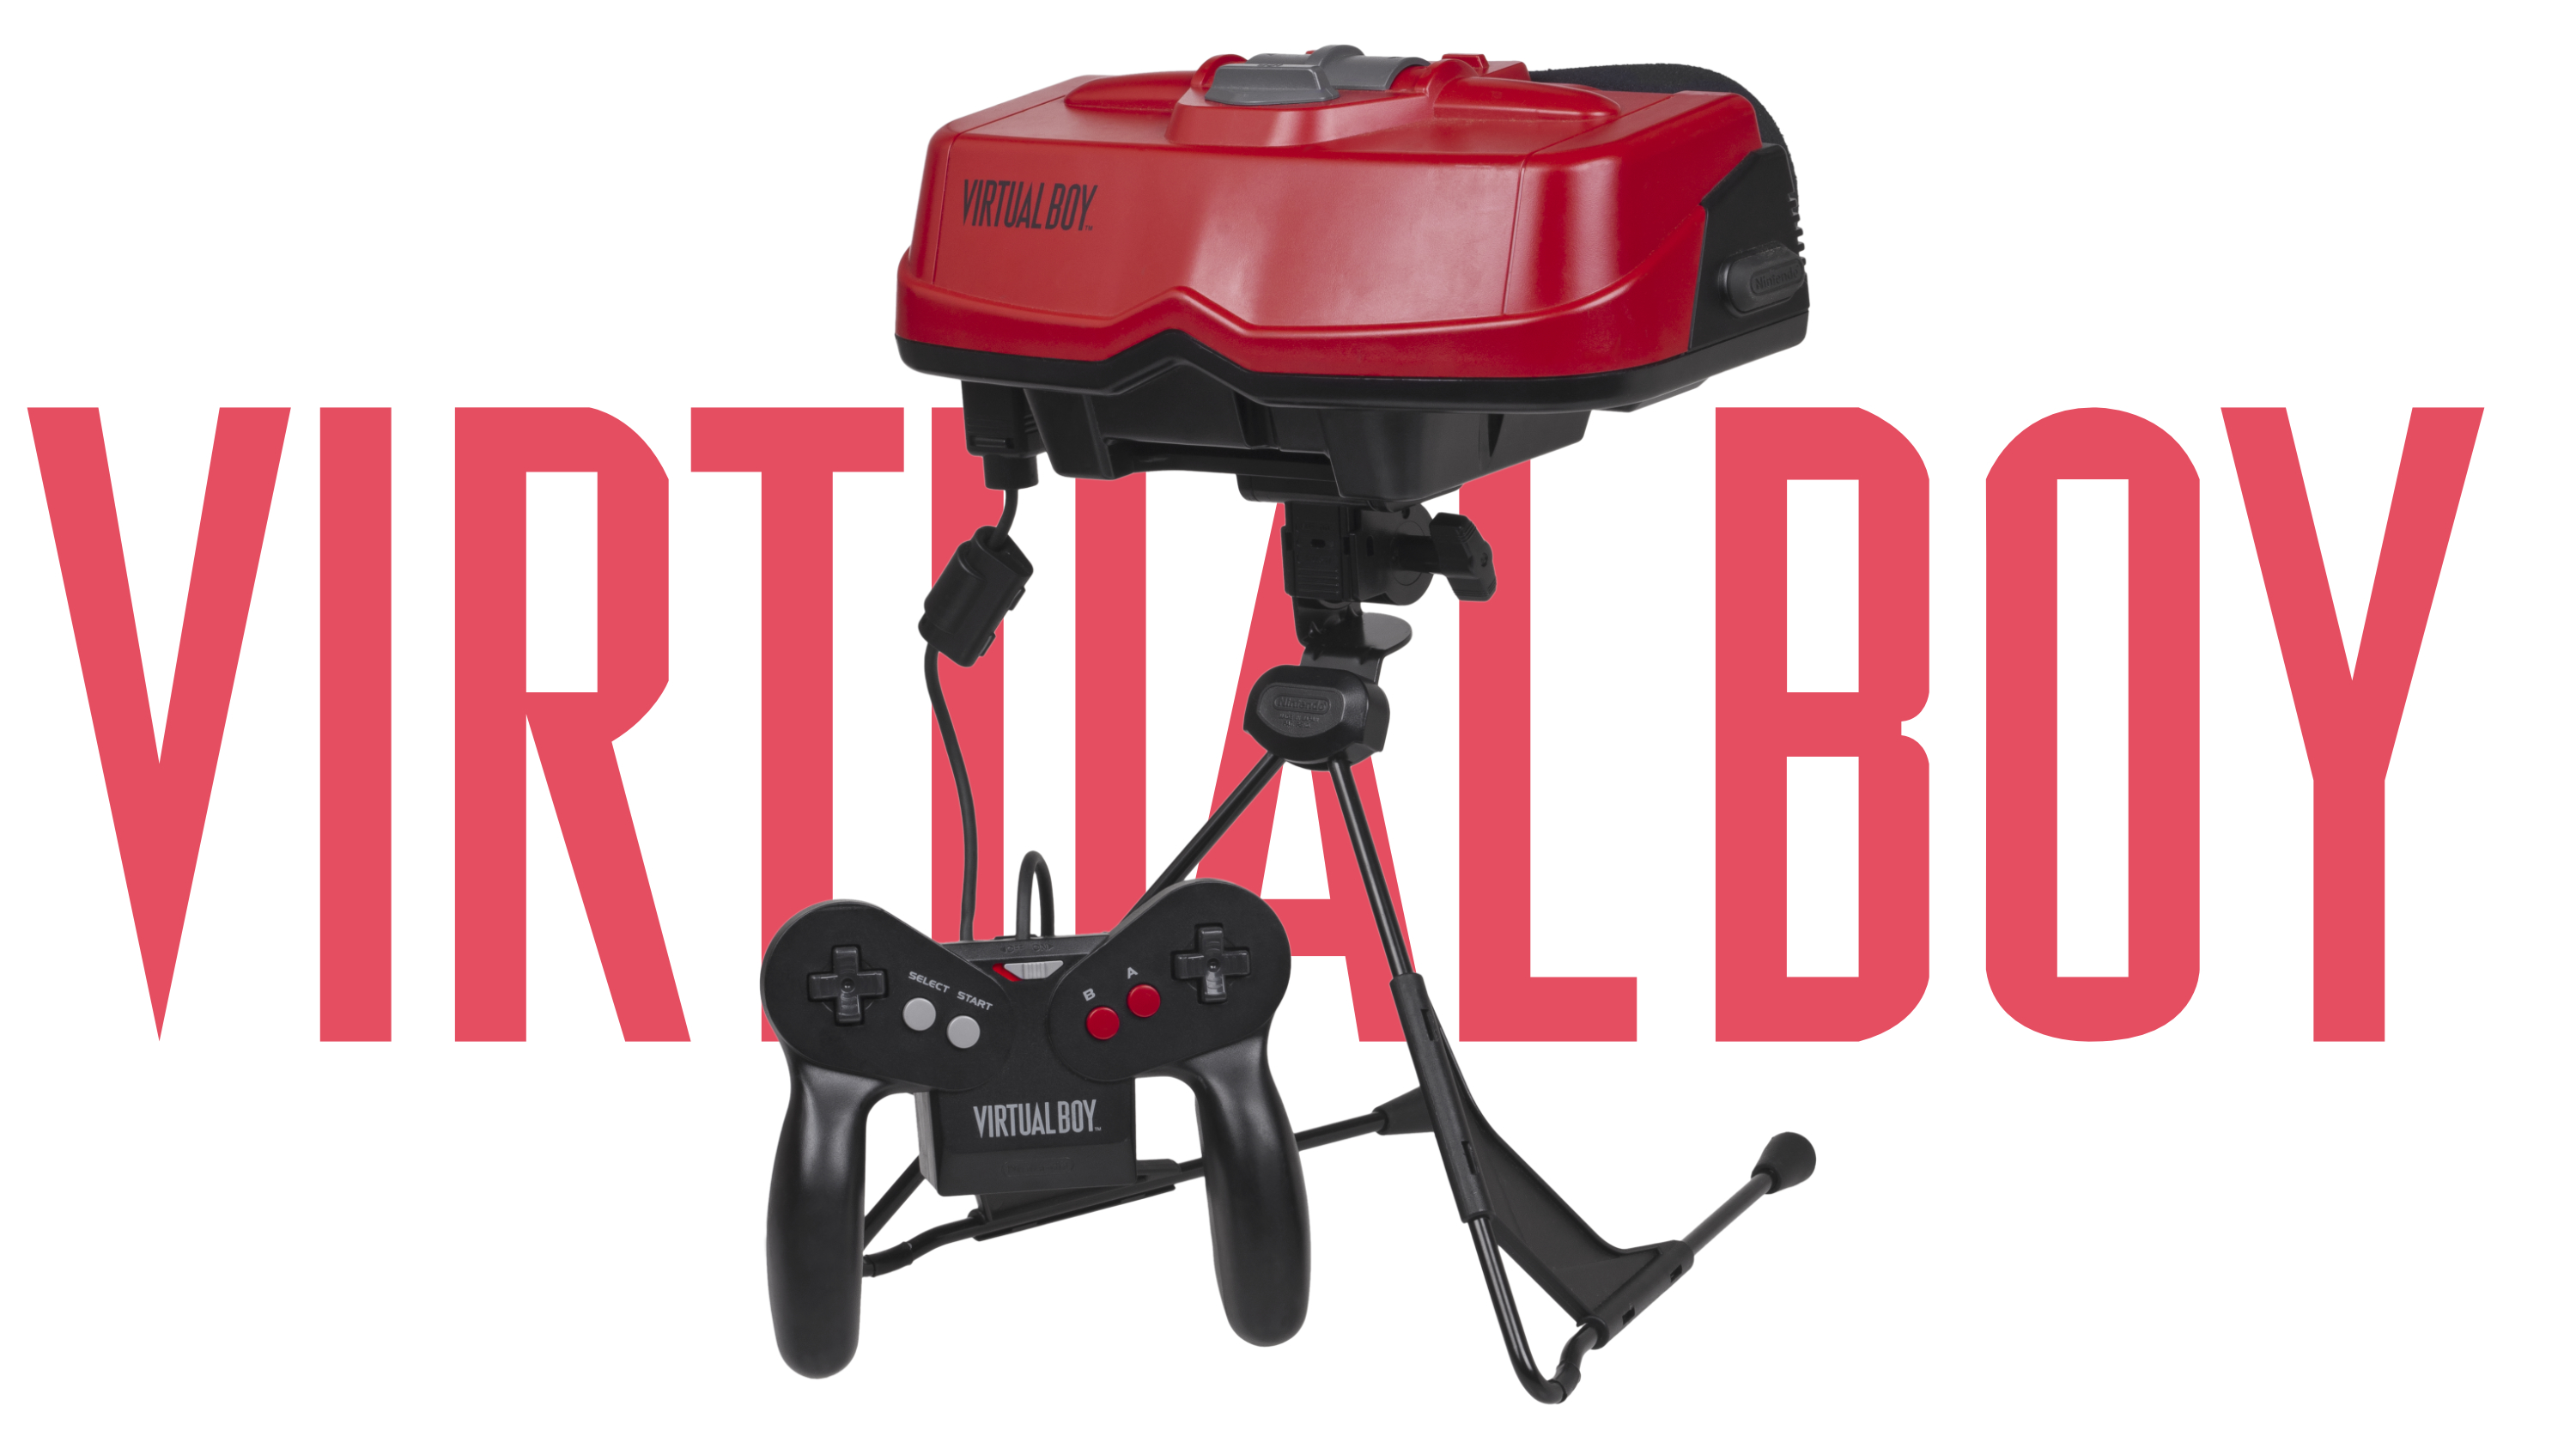 Konsola Nintendo Virtual Boy, czyli gogle VR bez VR